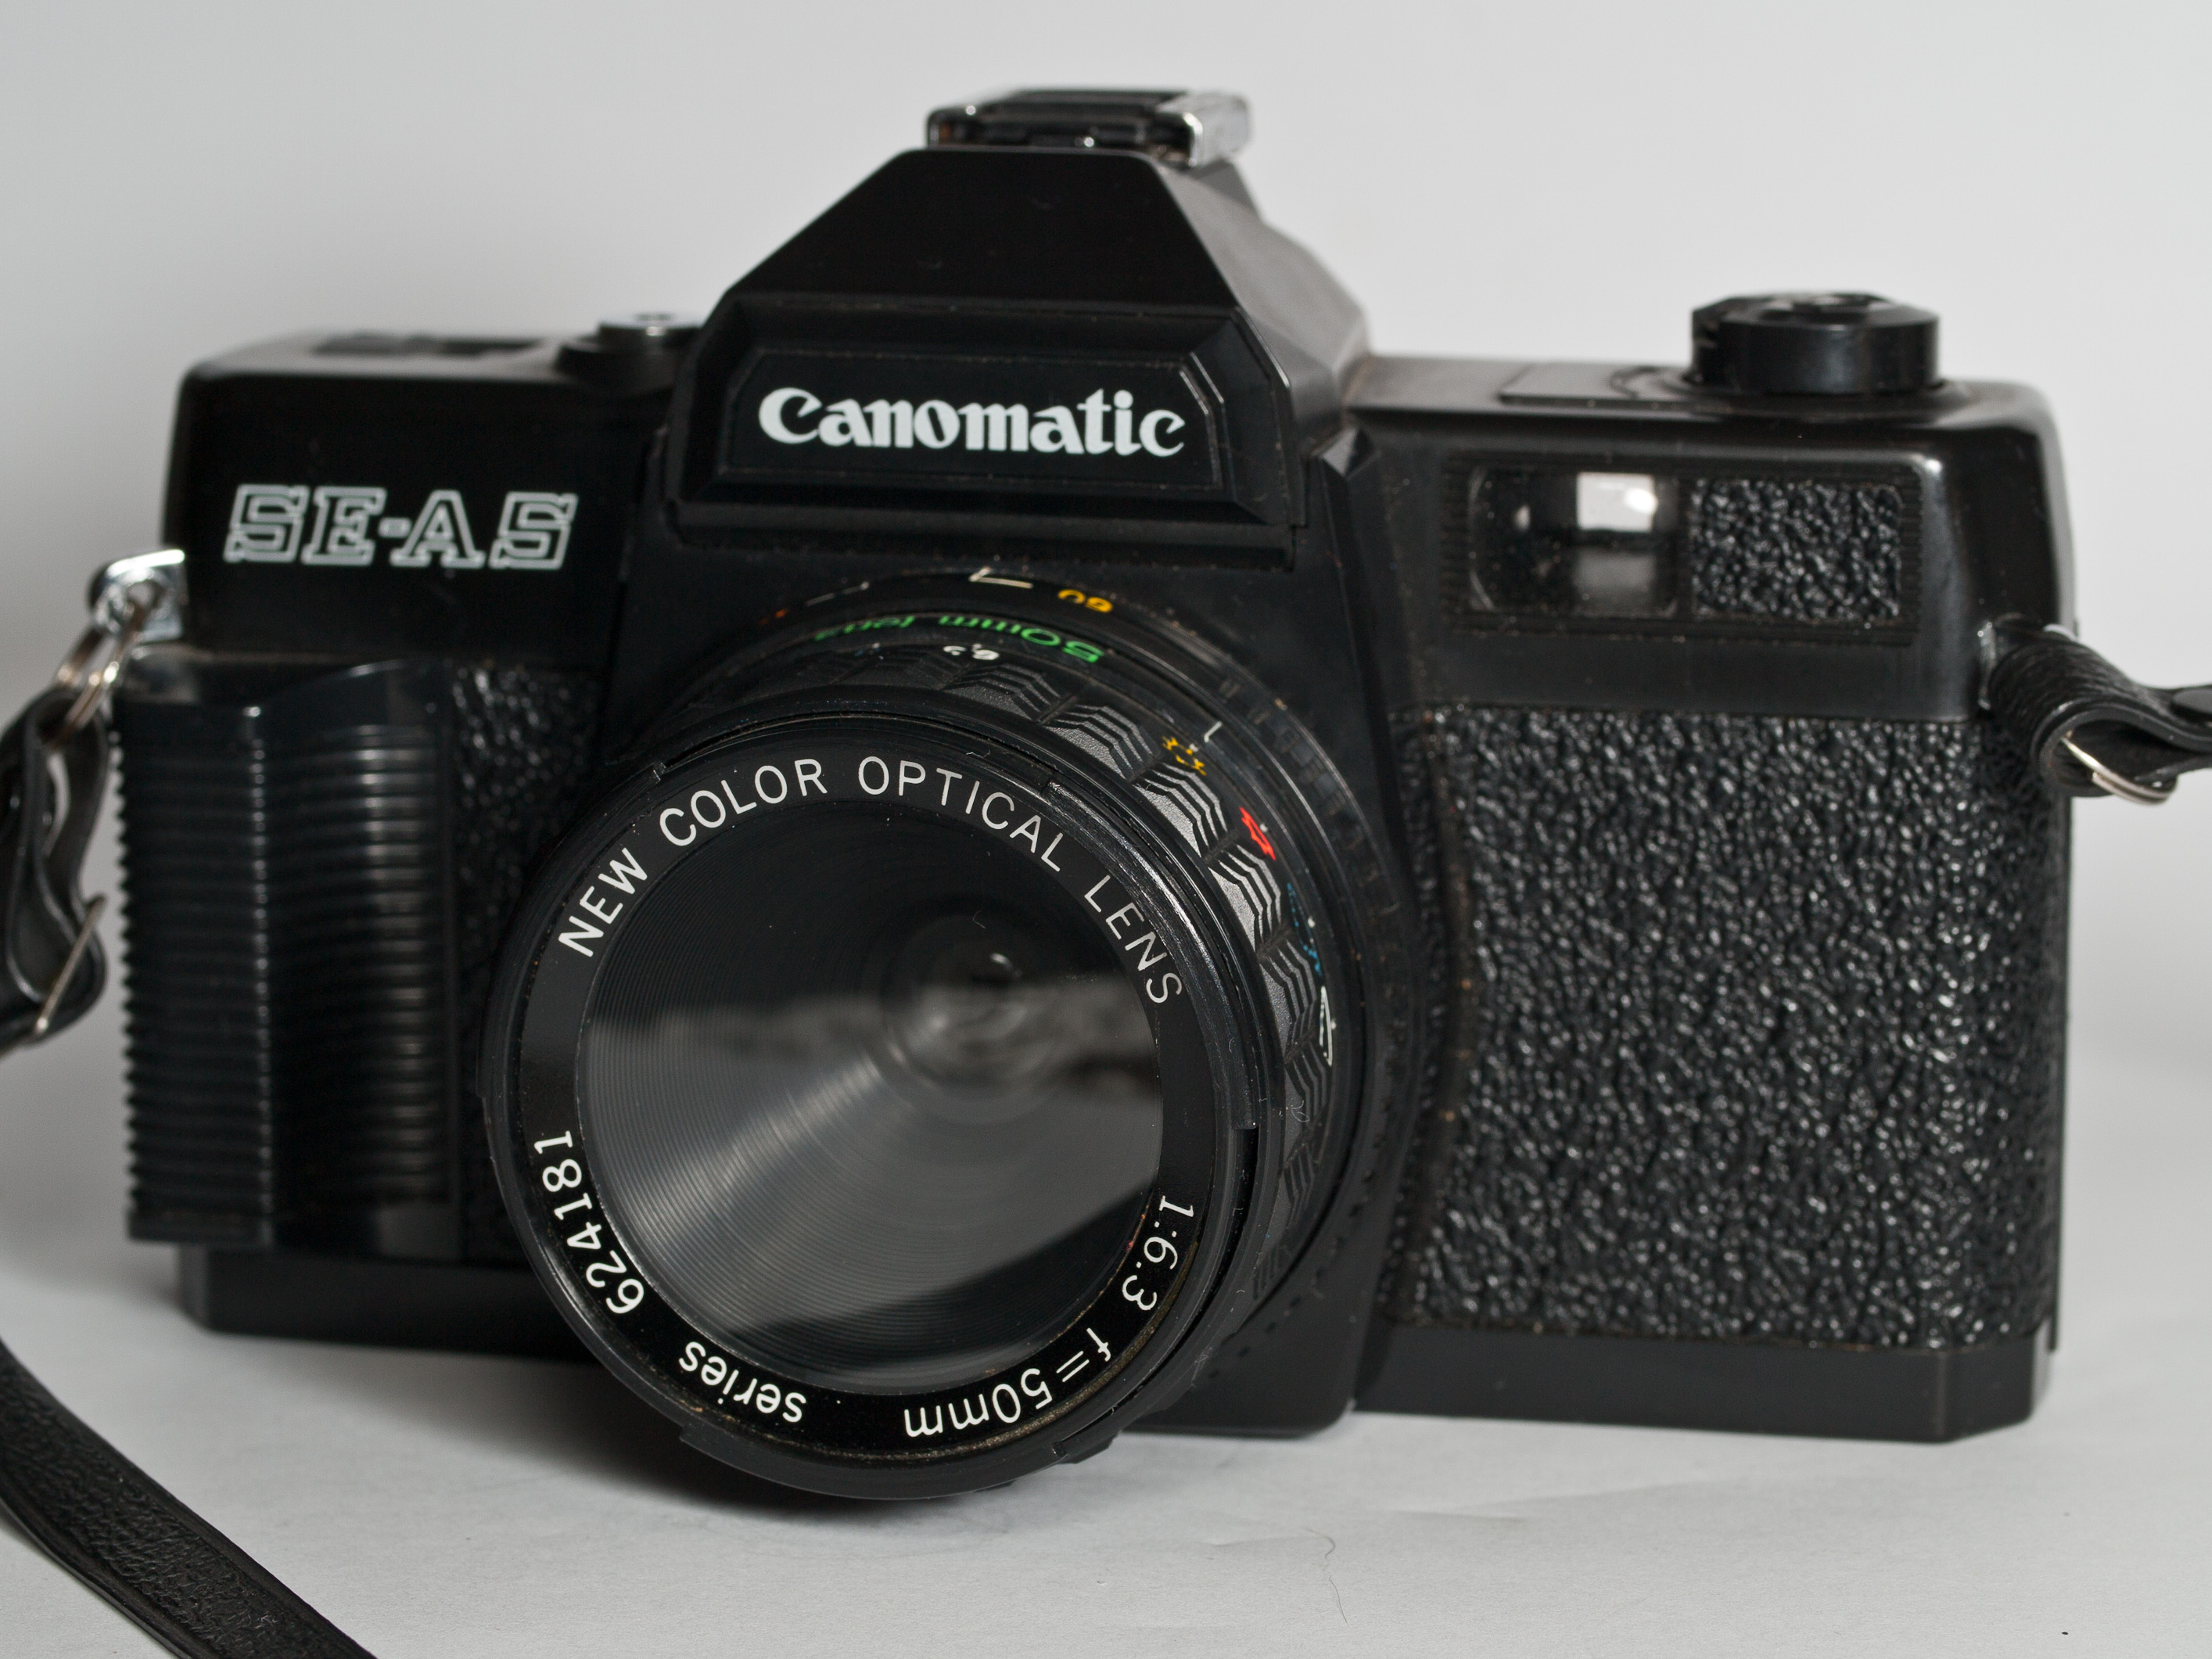 Canon - Canomatic SE-AS